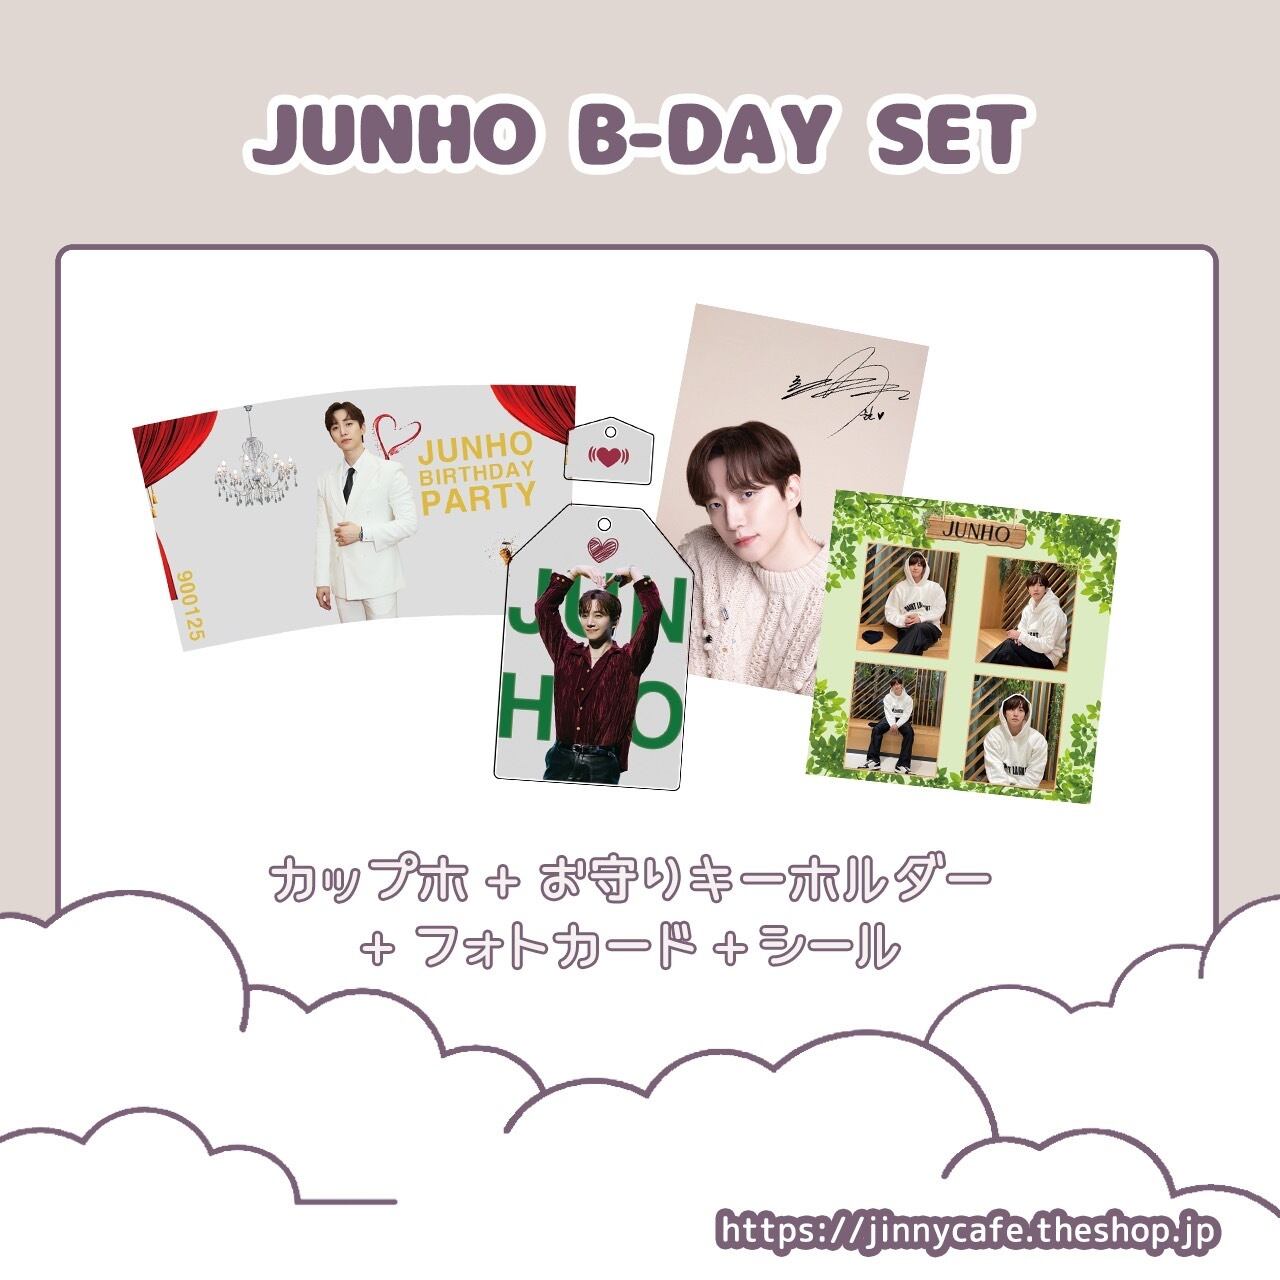 Happy Birthday JUNHO]ジュノ B-DAY SET【2PM】 | カフェJINNY